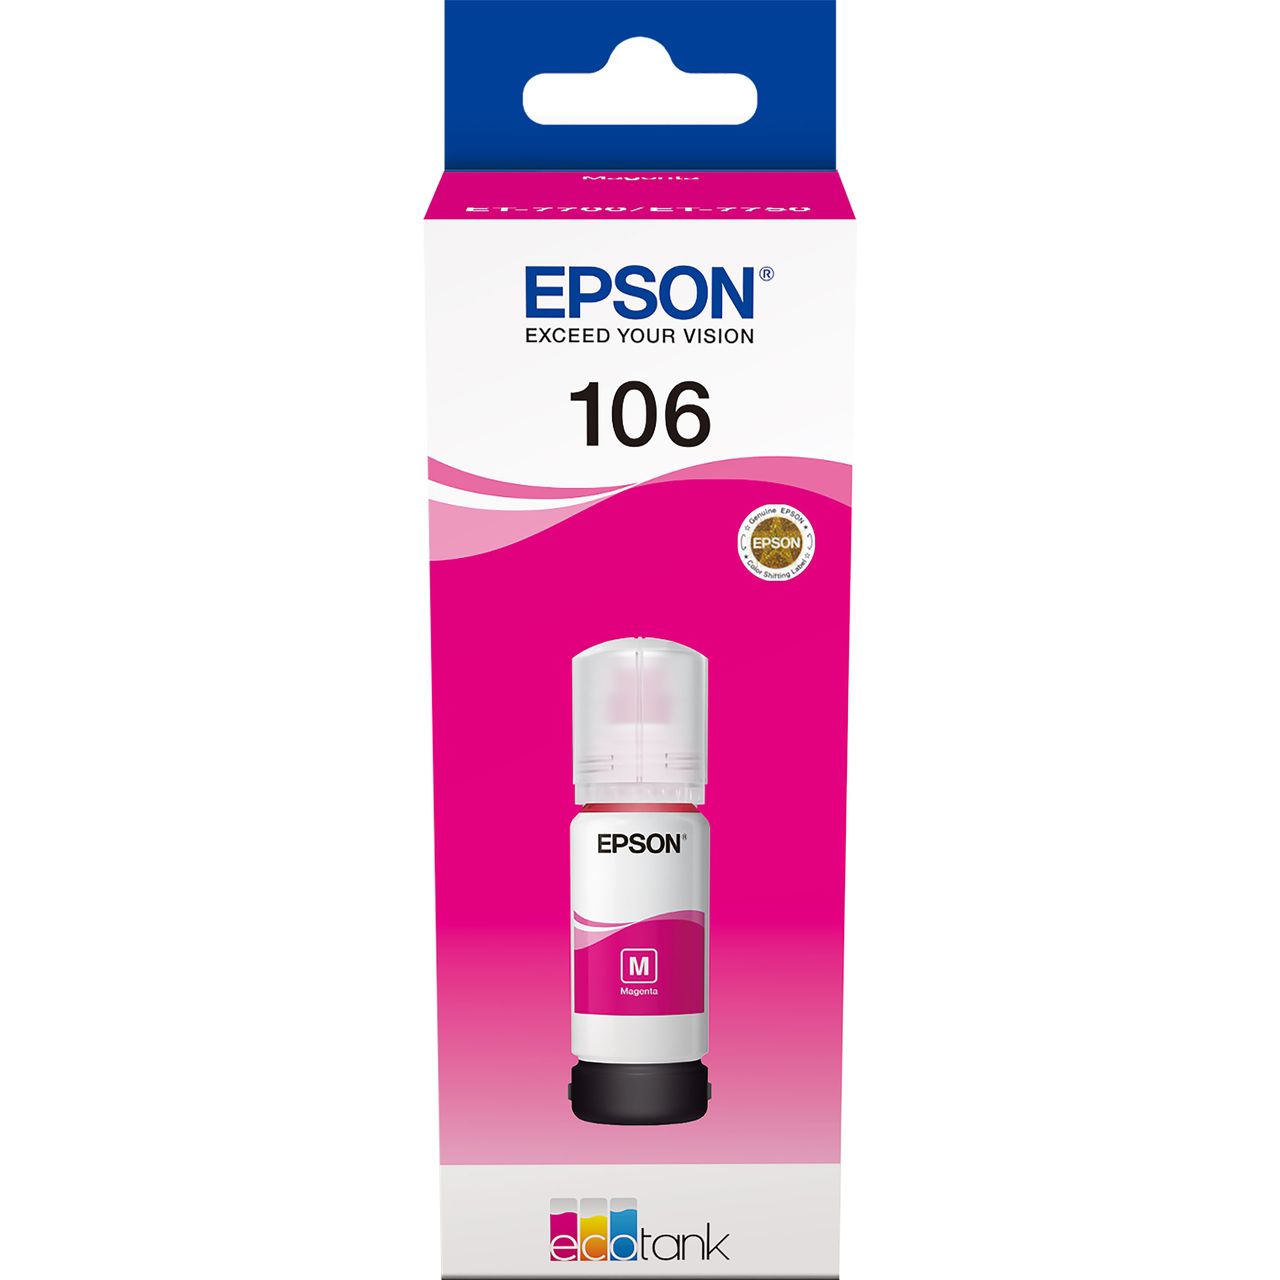 Epson 106 EcoTank Magenta Ink Bottle Review